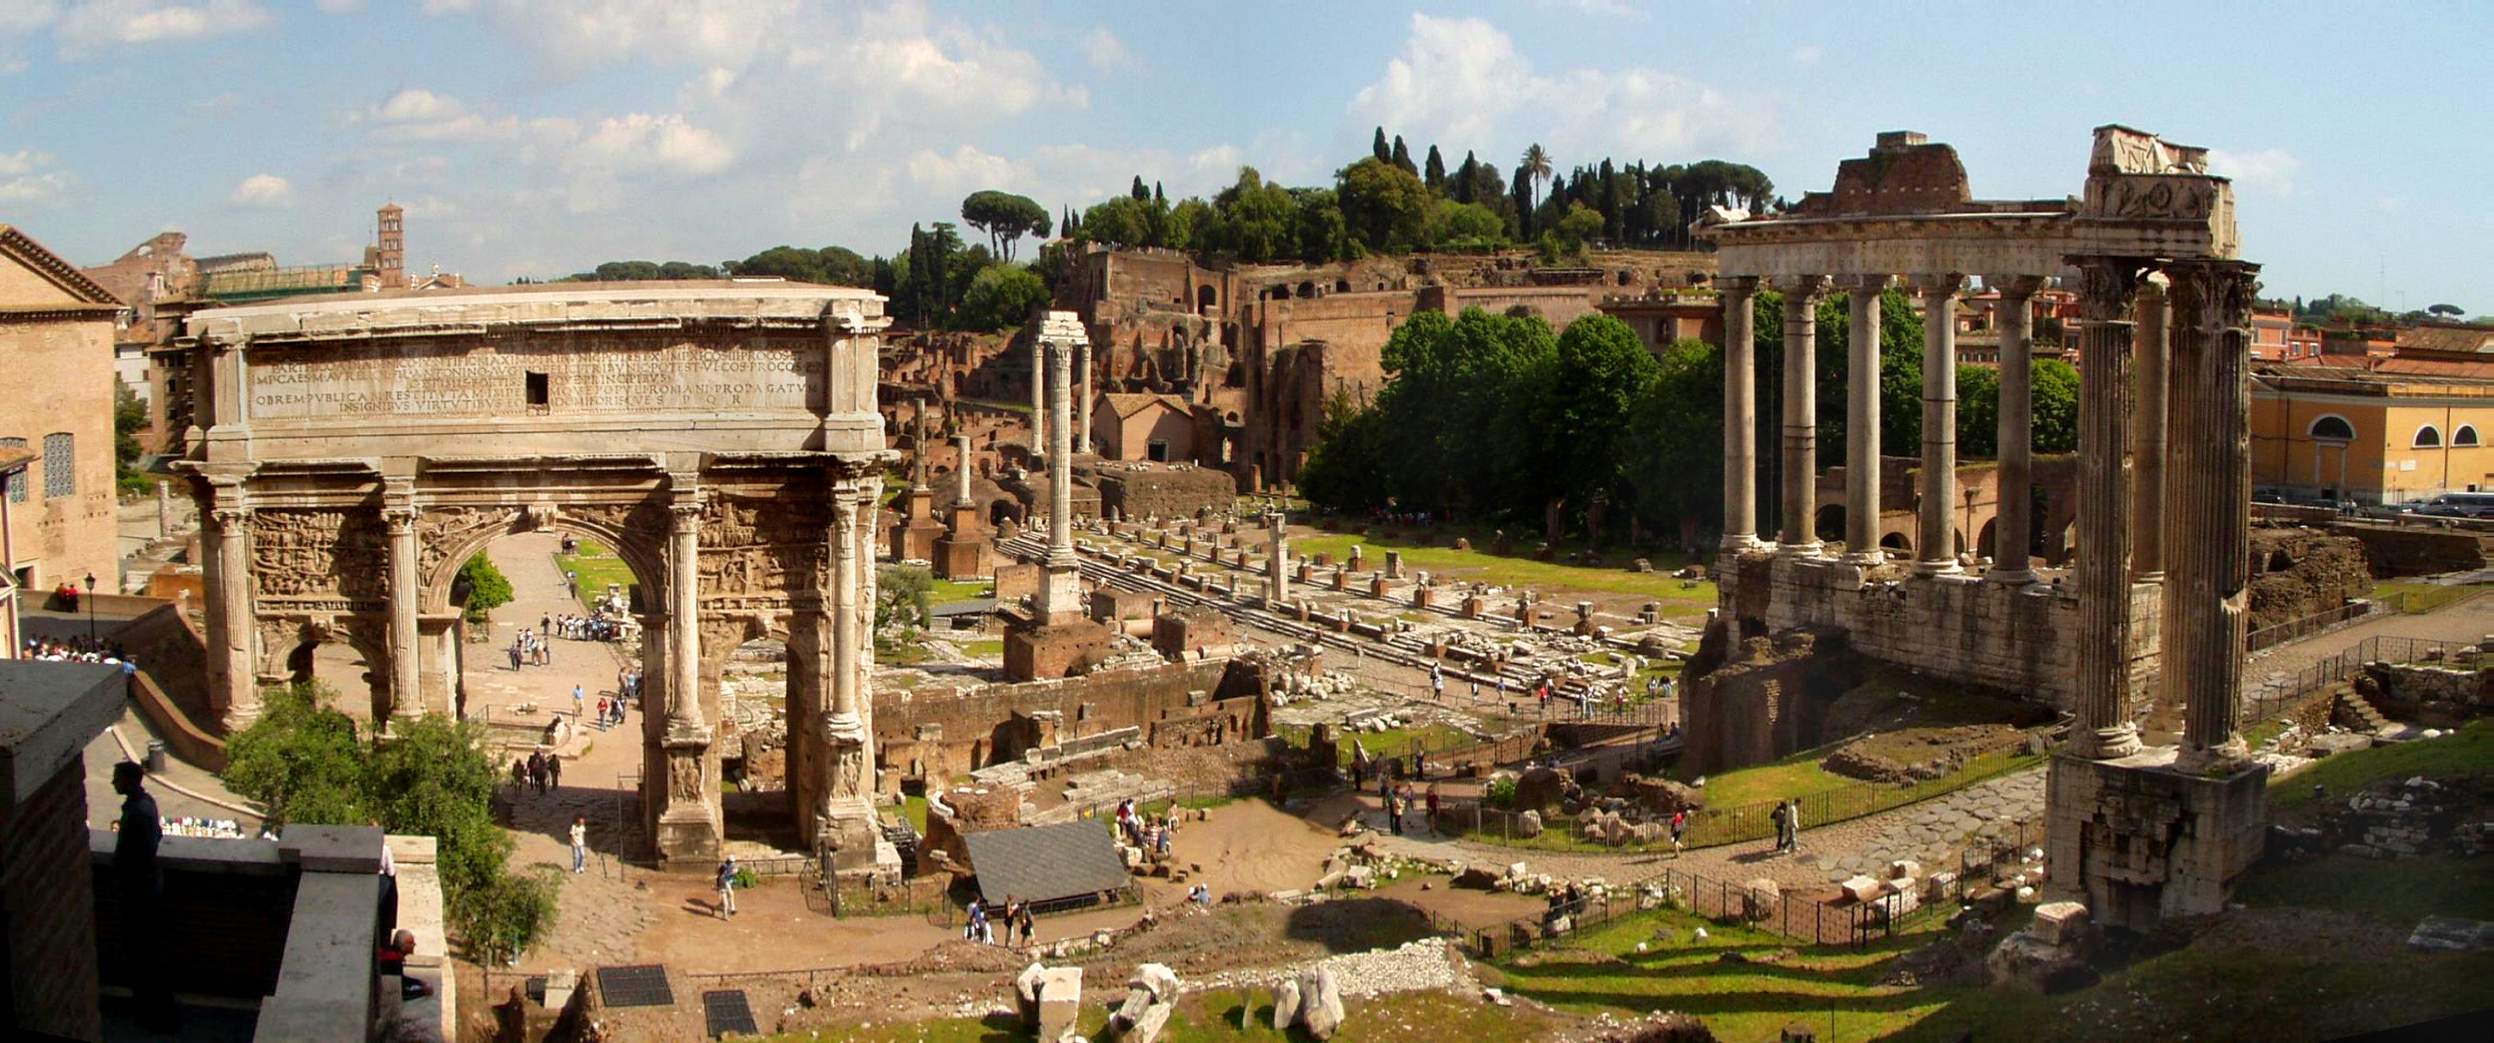 File:Forum Romanum panorama.jpg - Wikimedia Commons